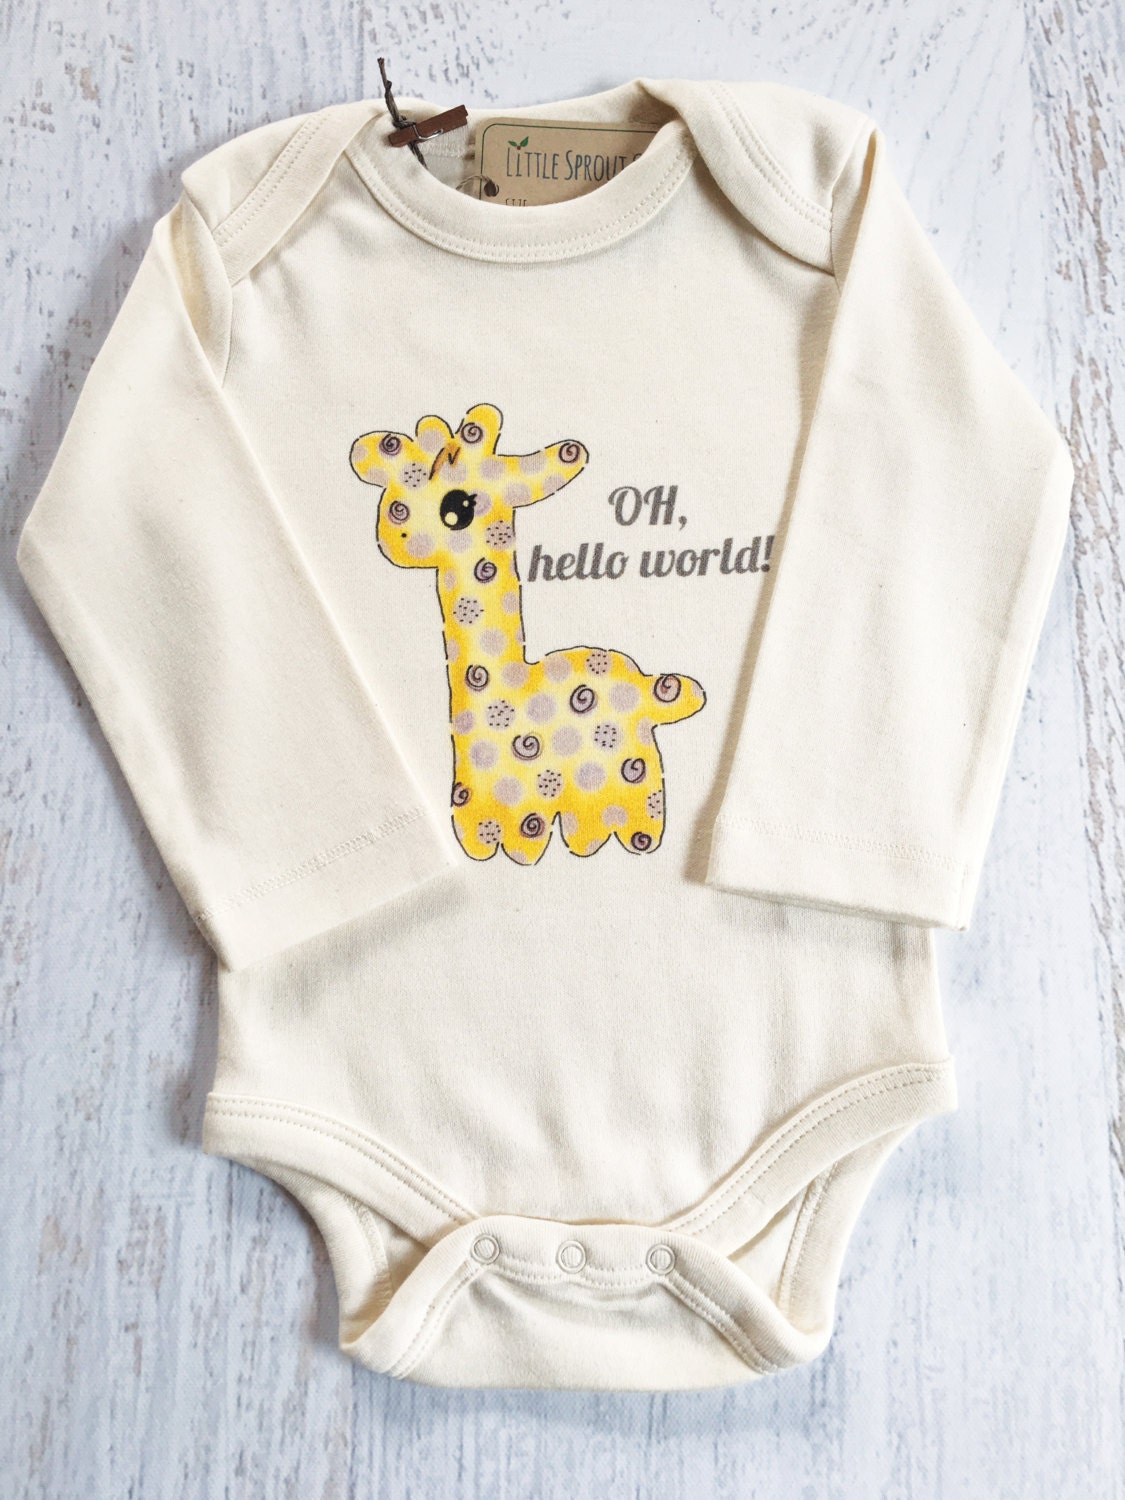 OH Hello World Baby Giraffe Gender Neutral Baby Clothes | Etsy